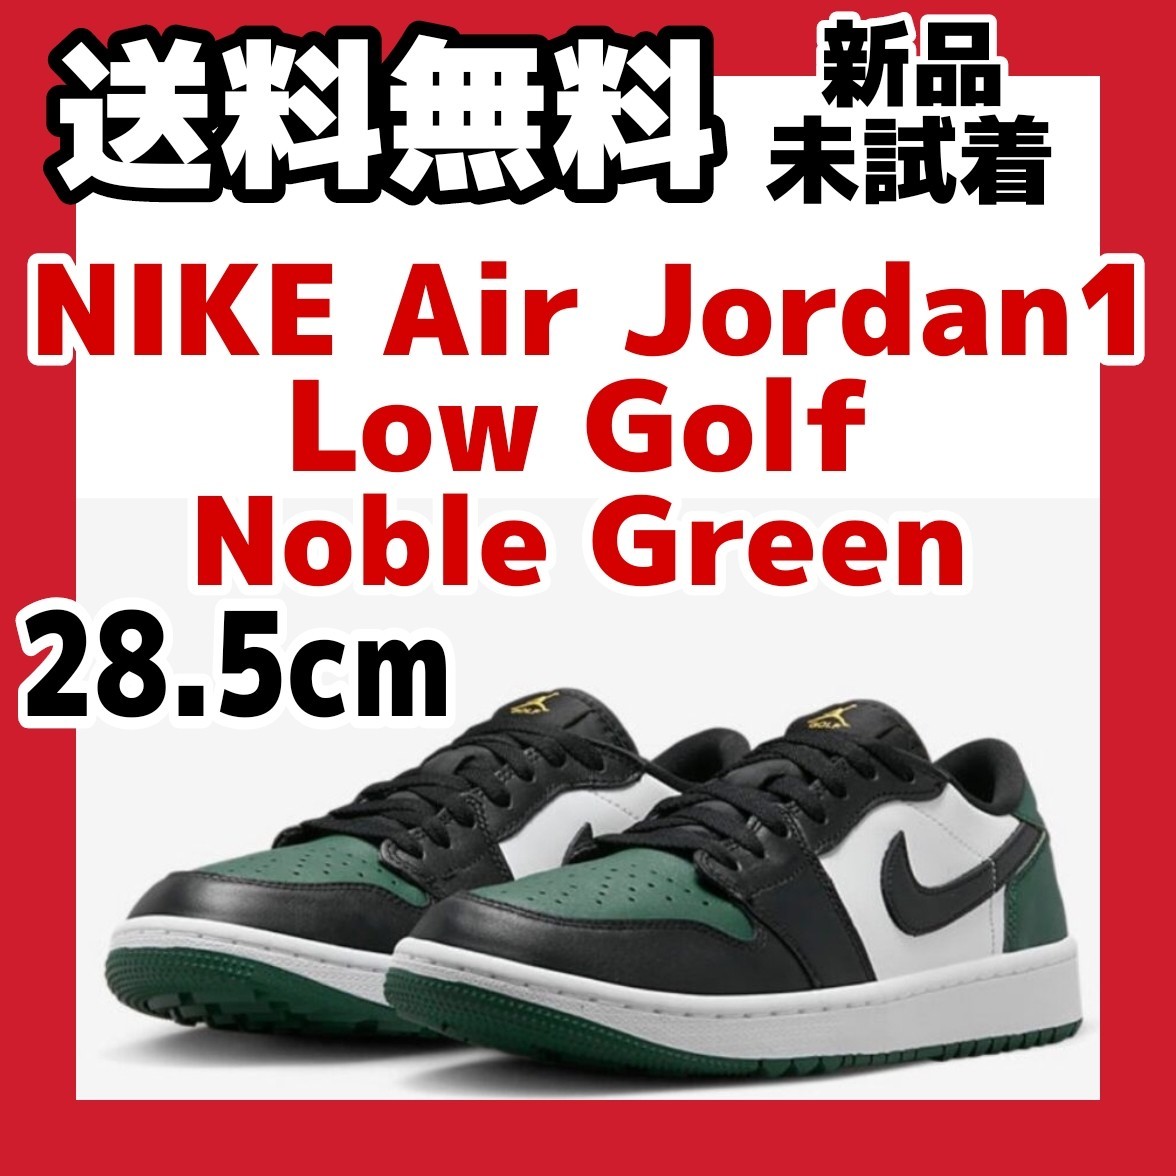 28.5cm Nike Air Jordan 1 Low Golf Noble Greenナイキ エアジョーダン1 ロー ゴルフ ノーブルグリーン  green toe グリーントゥ 防水